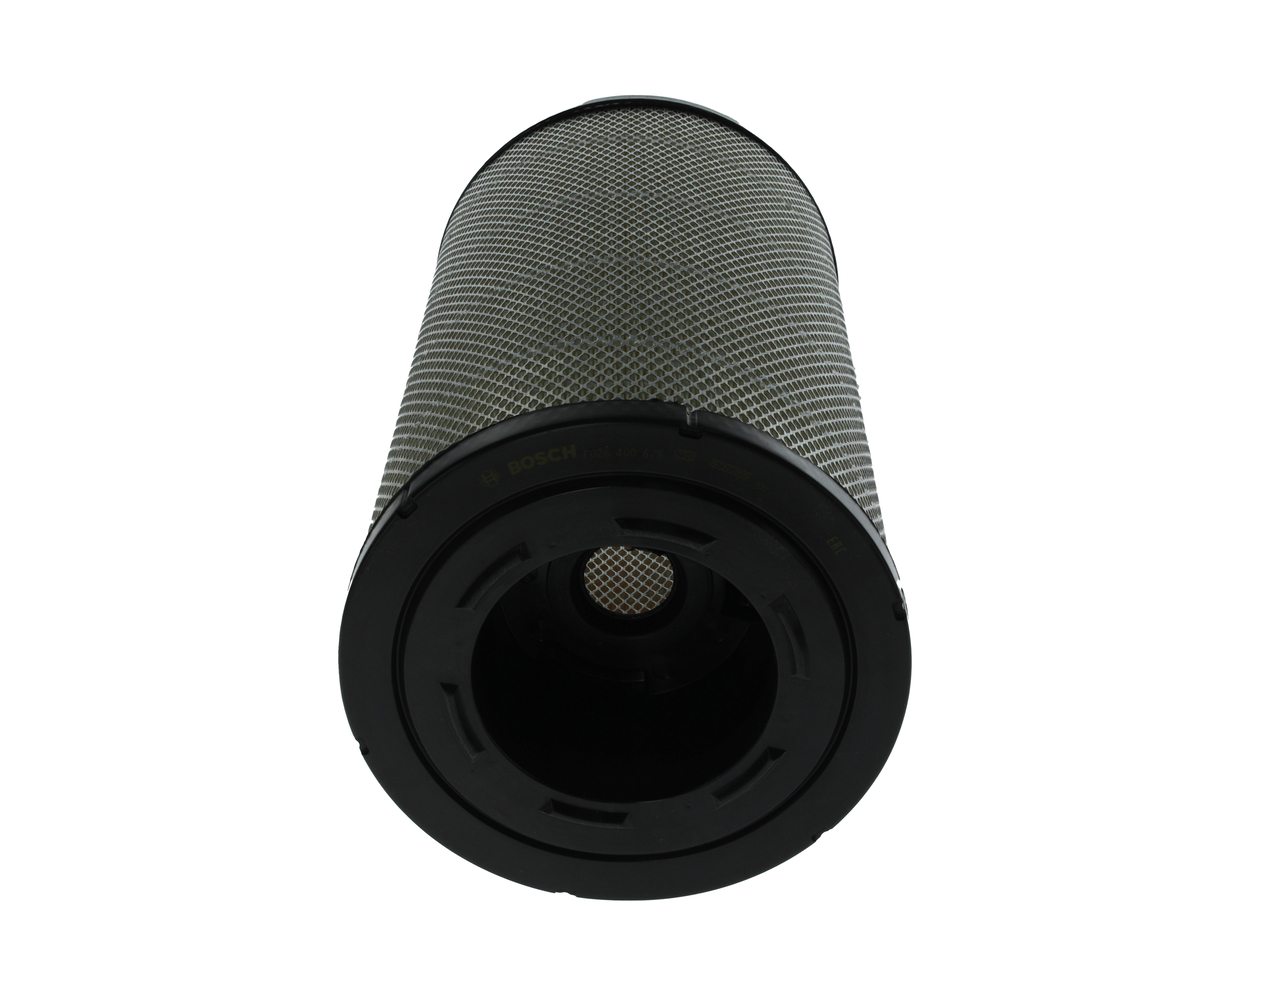 S 0678 BOSCH 510mm, 275mm, Filter Insert Height: 510mm Engine air filter F 026 400 678 buy